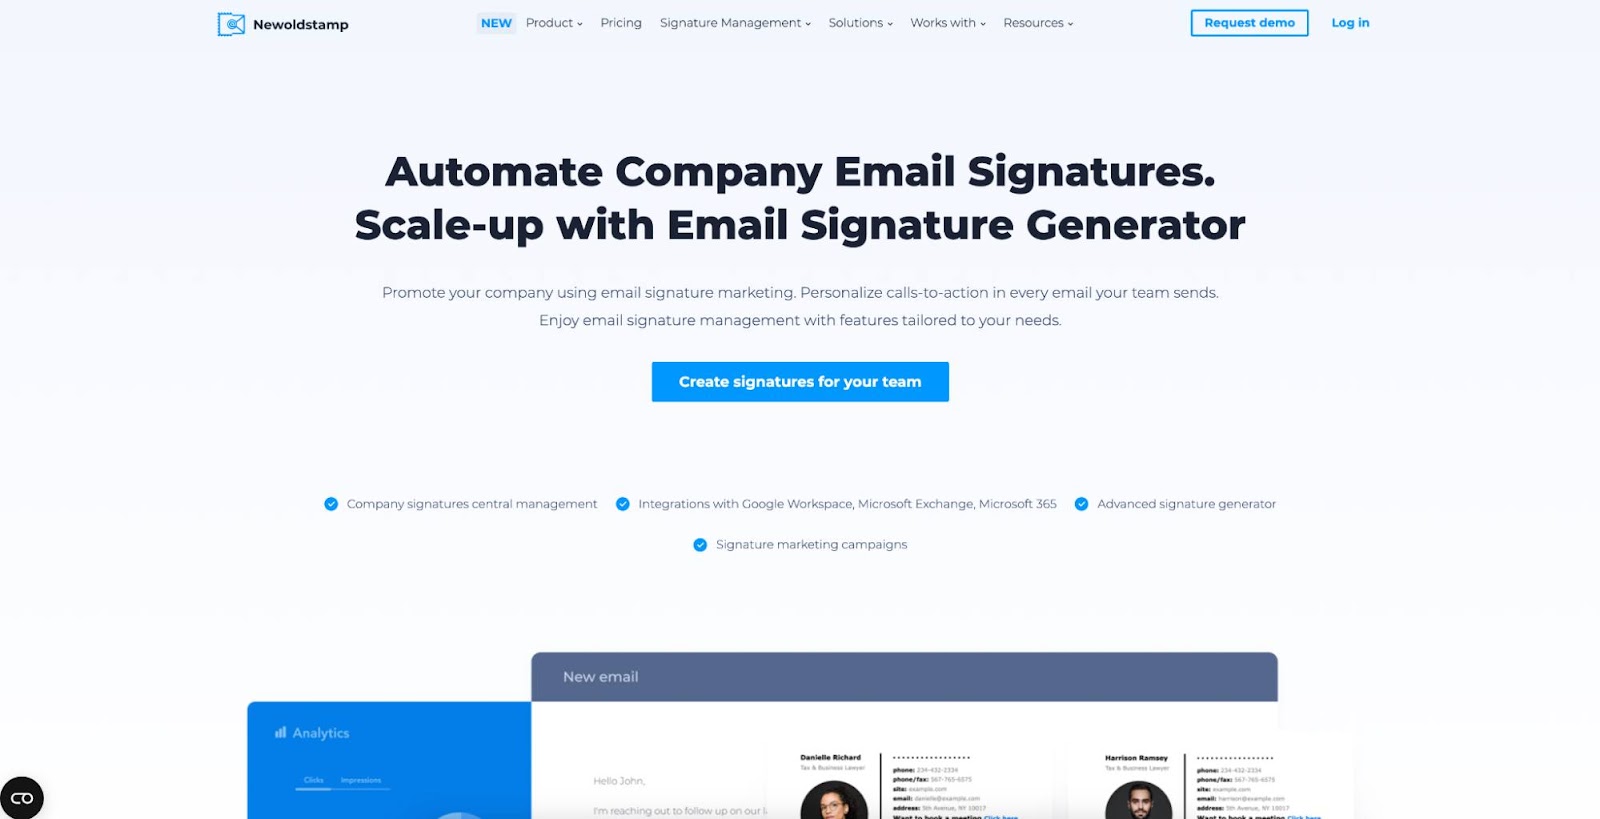 Email Signatures, Newoldstamp